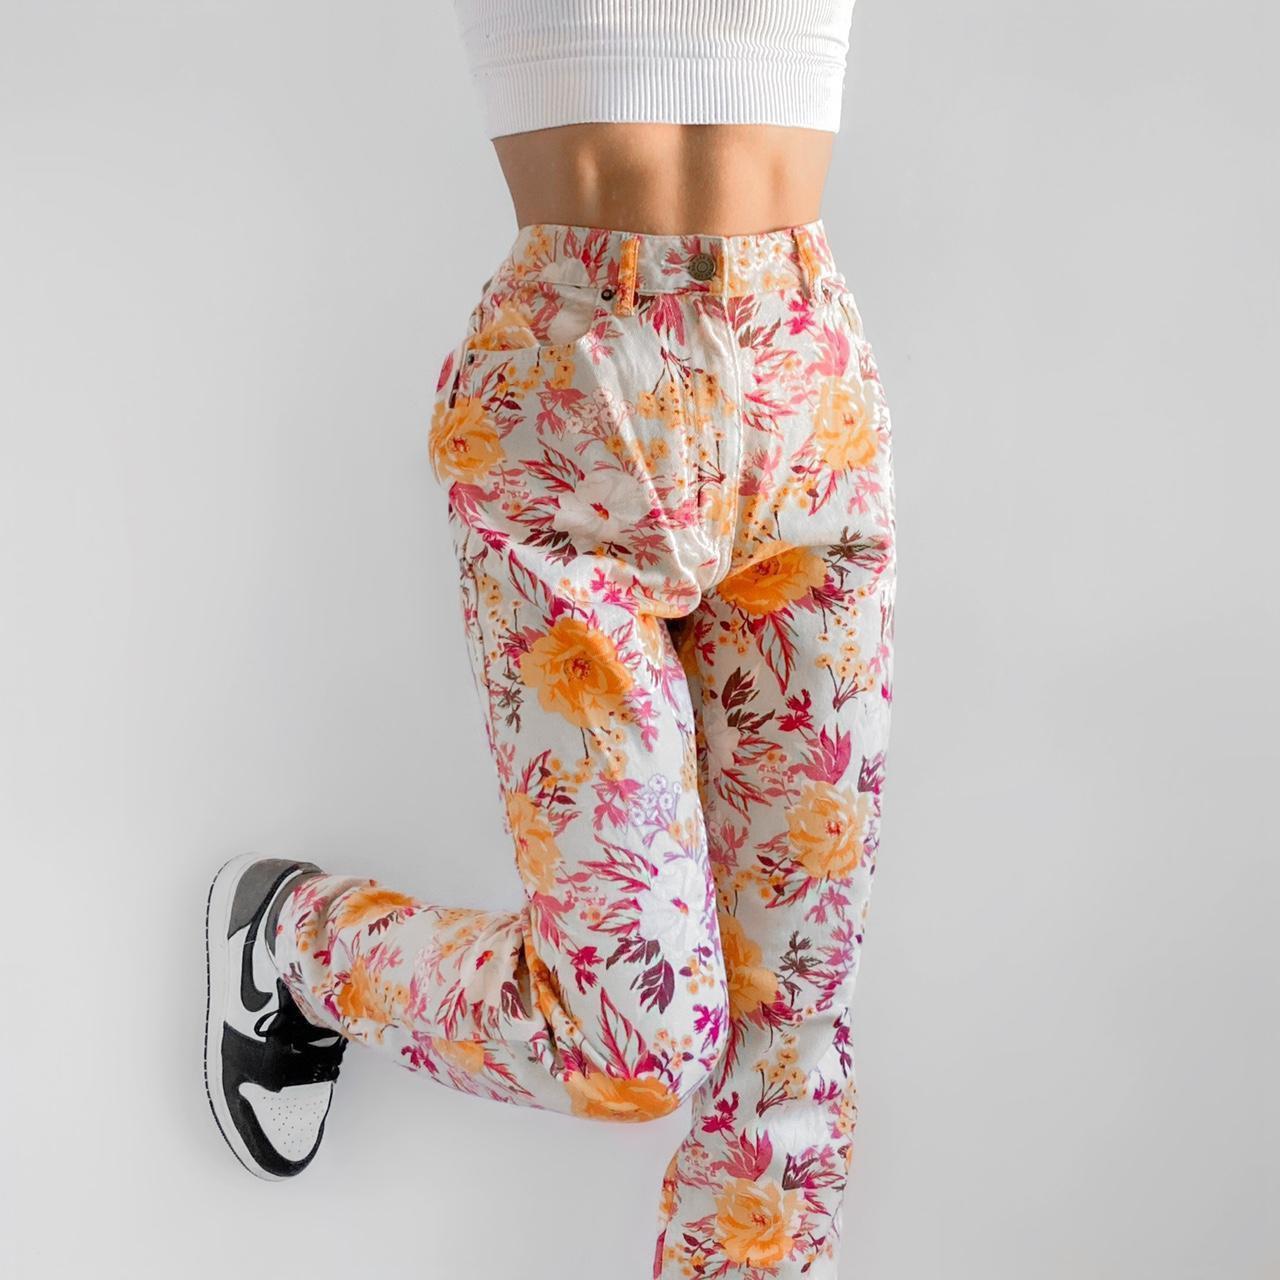 Rose printed high-rise leggings in multicoloured - The Upside